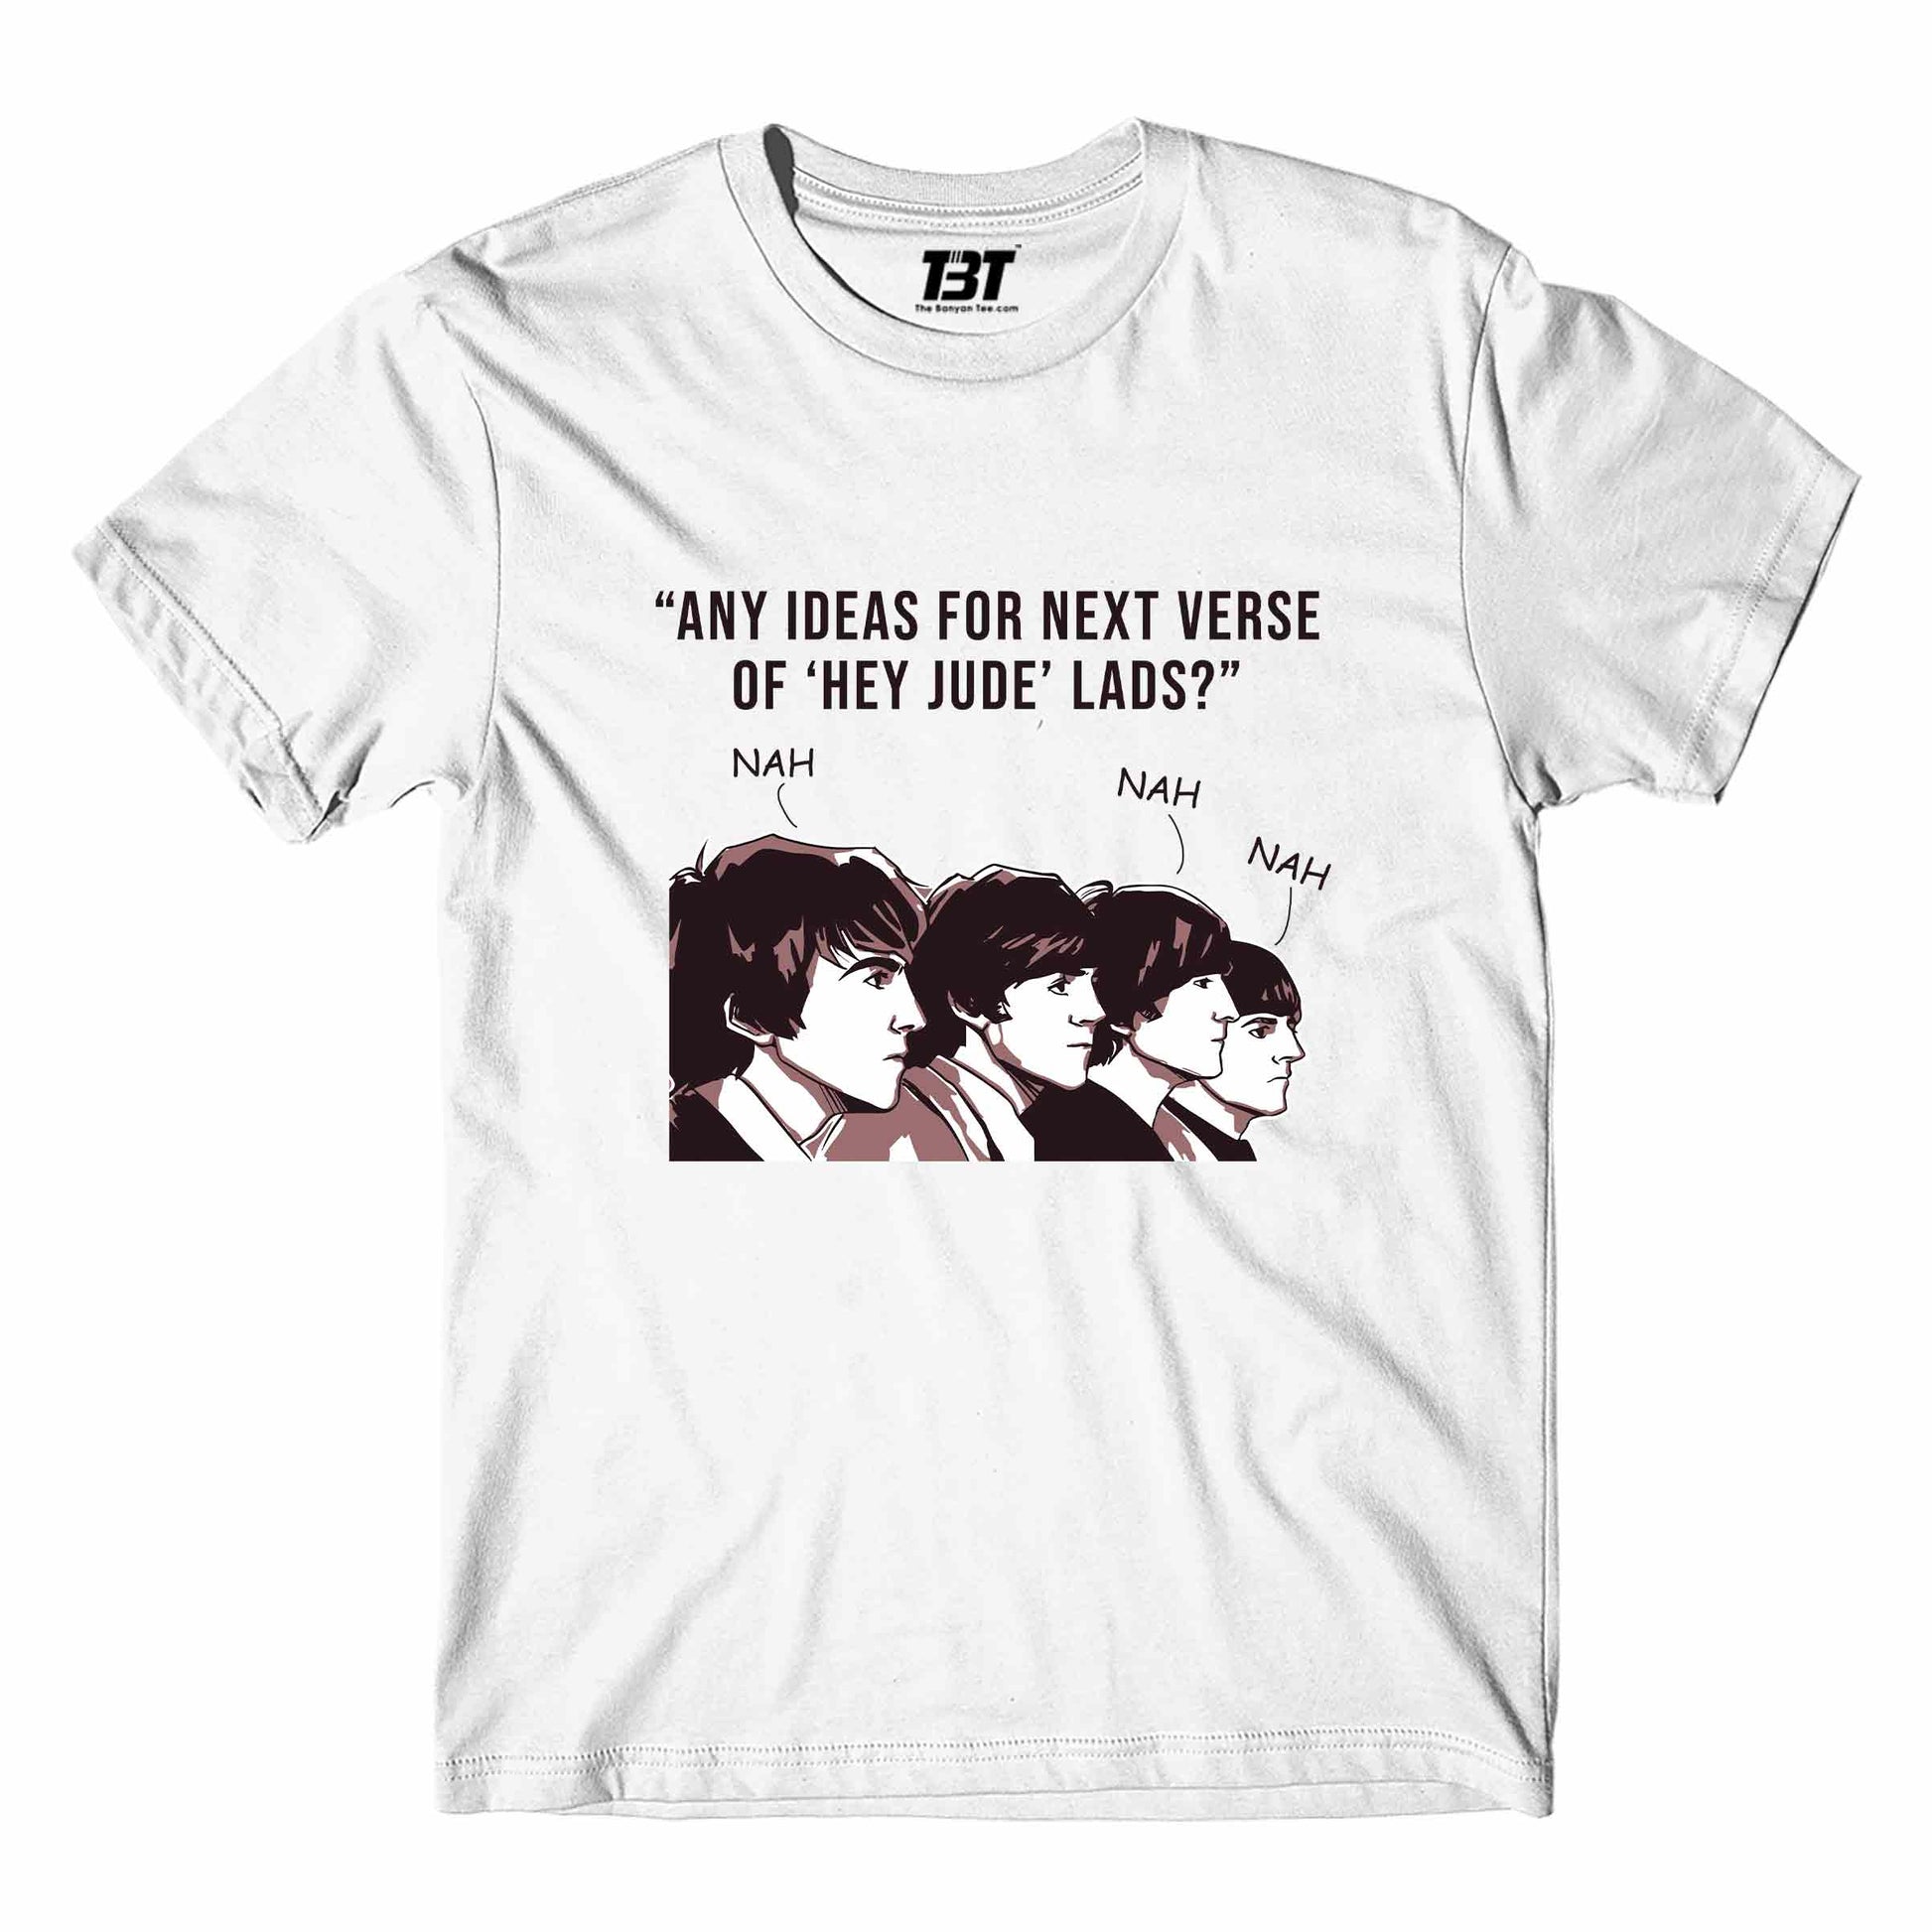 Hey Jude The Beatles T-shirt - T-shirt The Banyan Tee TBT shirt for men women boys designer stylish online cotton usa united states